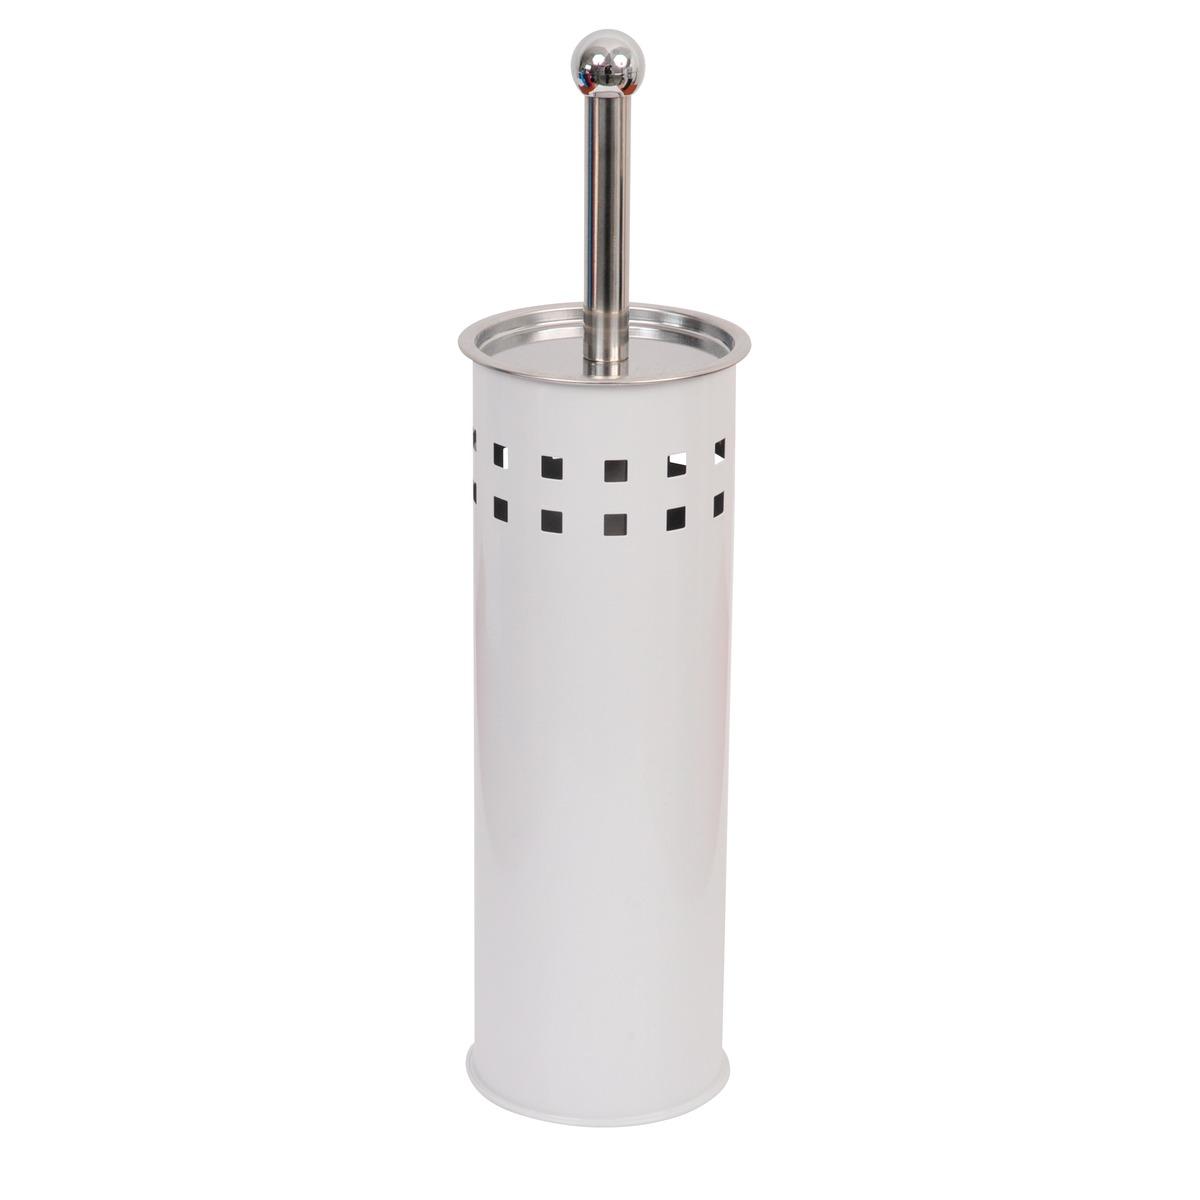 Brosse WC + support en acier inoxydable - Diamètre 9,5 x 37 cm - Blanc